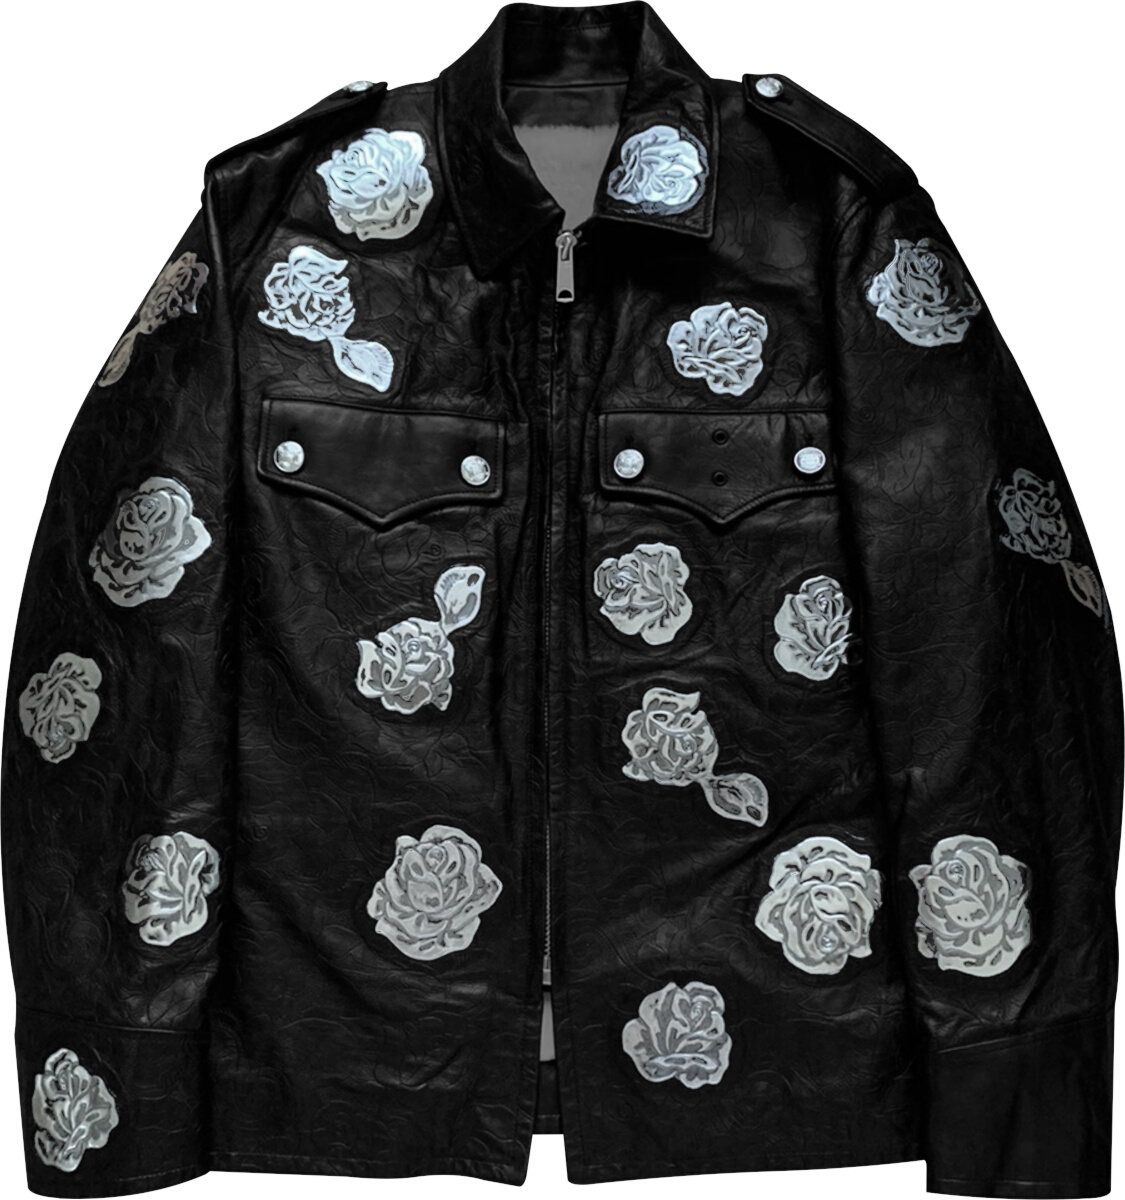 calvin klein 205w39nyc leather jacket